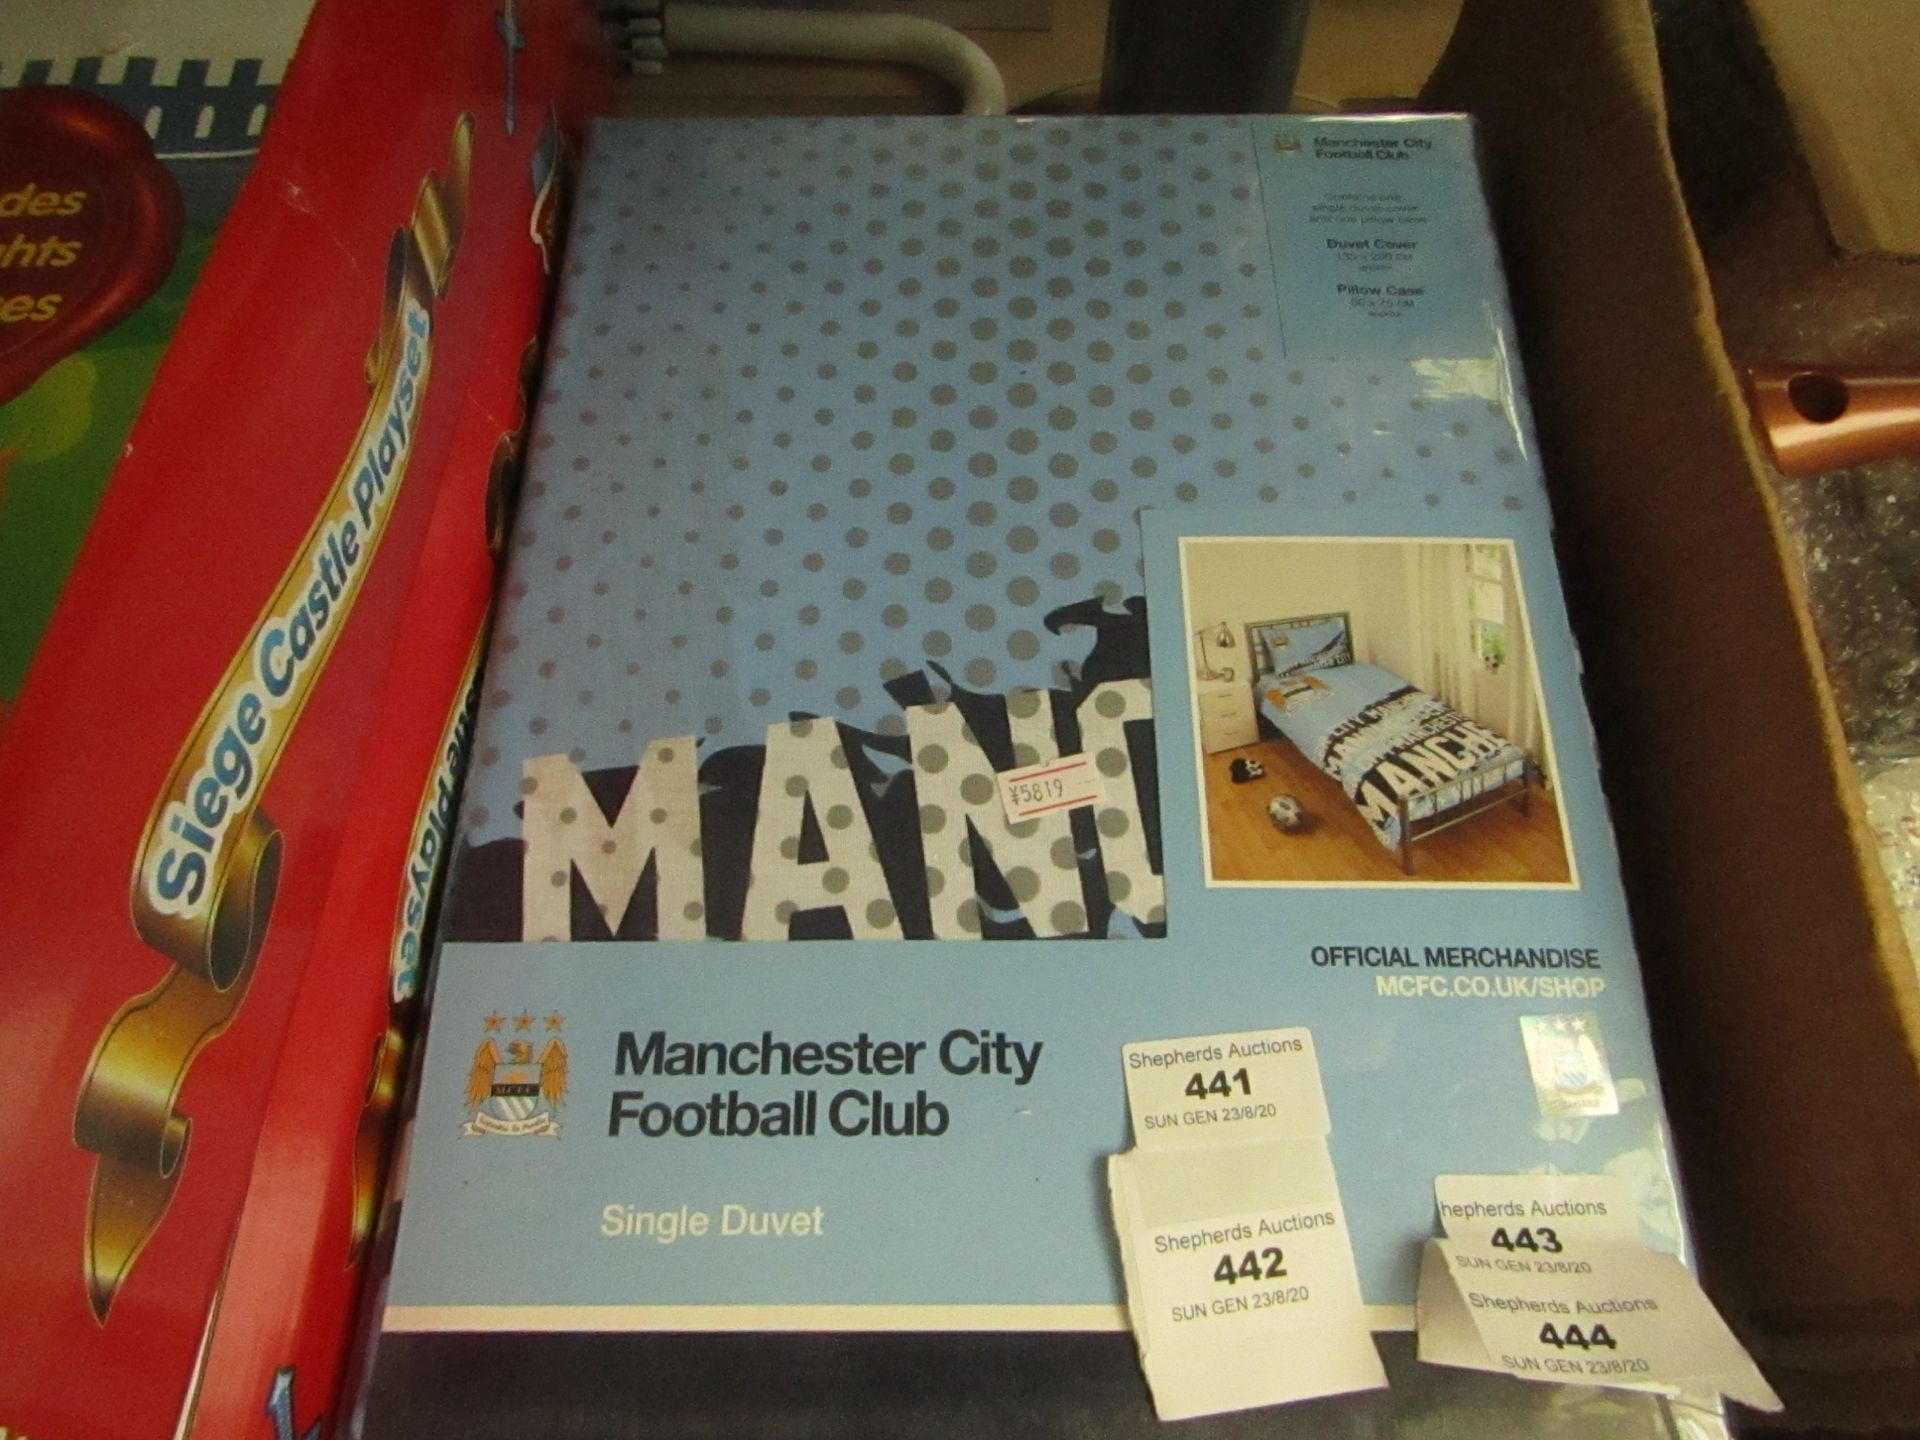 Manchester City Football Club - Single Duvet Set : 1x Duvet Cover. 1x Pillowcase. - New & Packaged.